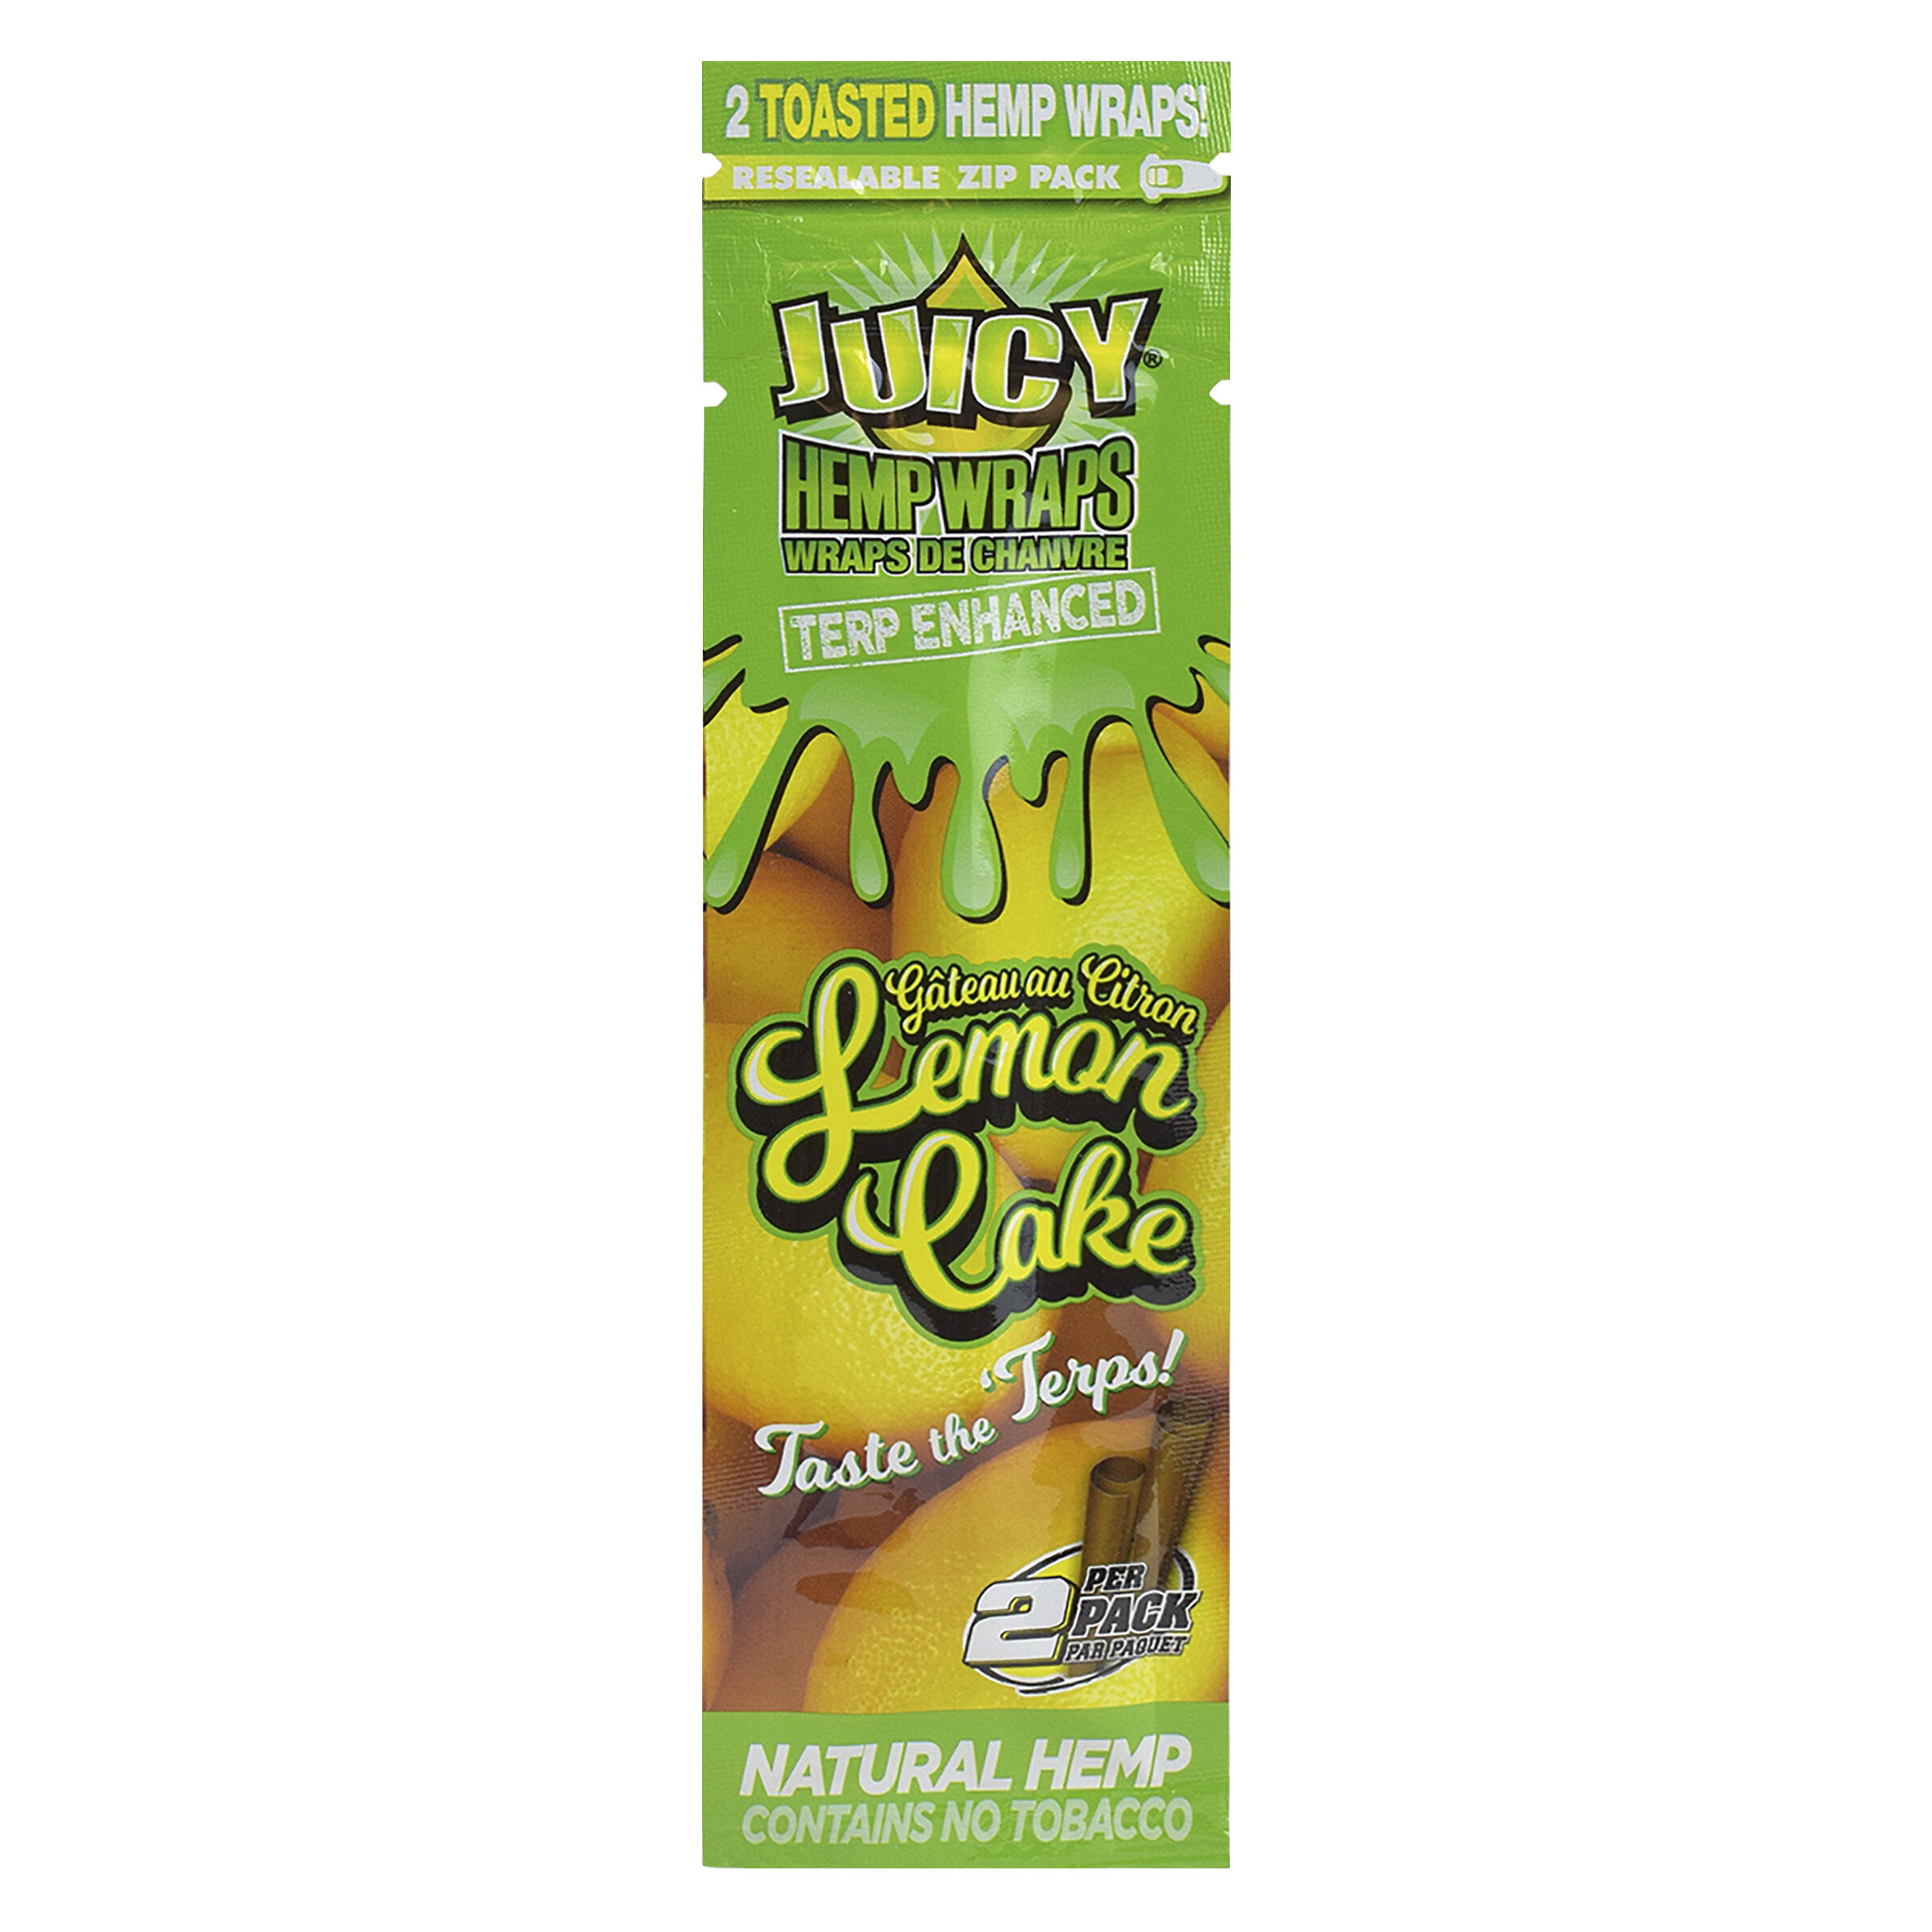 Hemp Wraps - Juicy Jay's - Terp-Enhanced Lemon Cake- 2pc